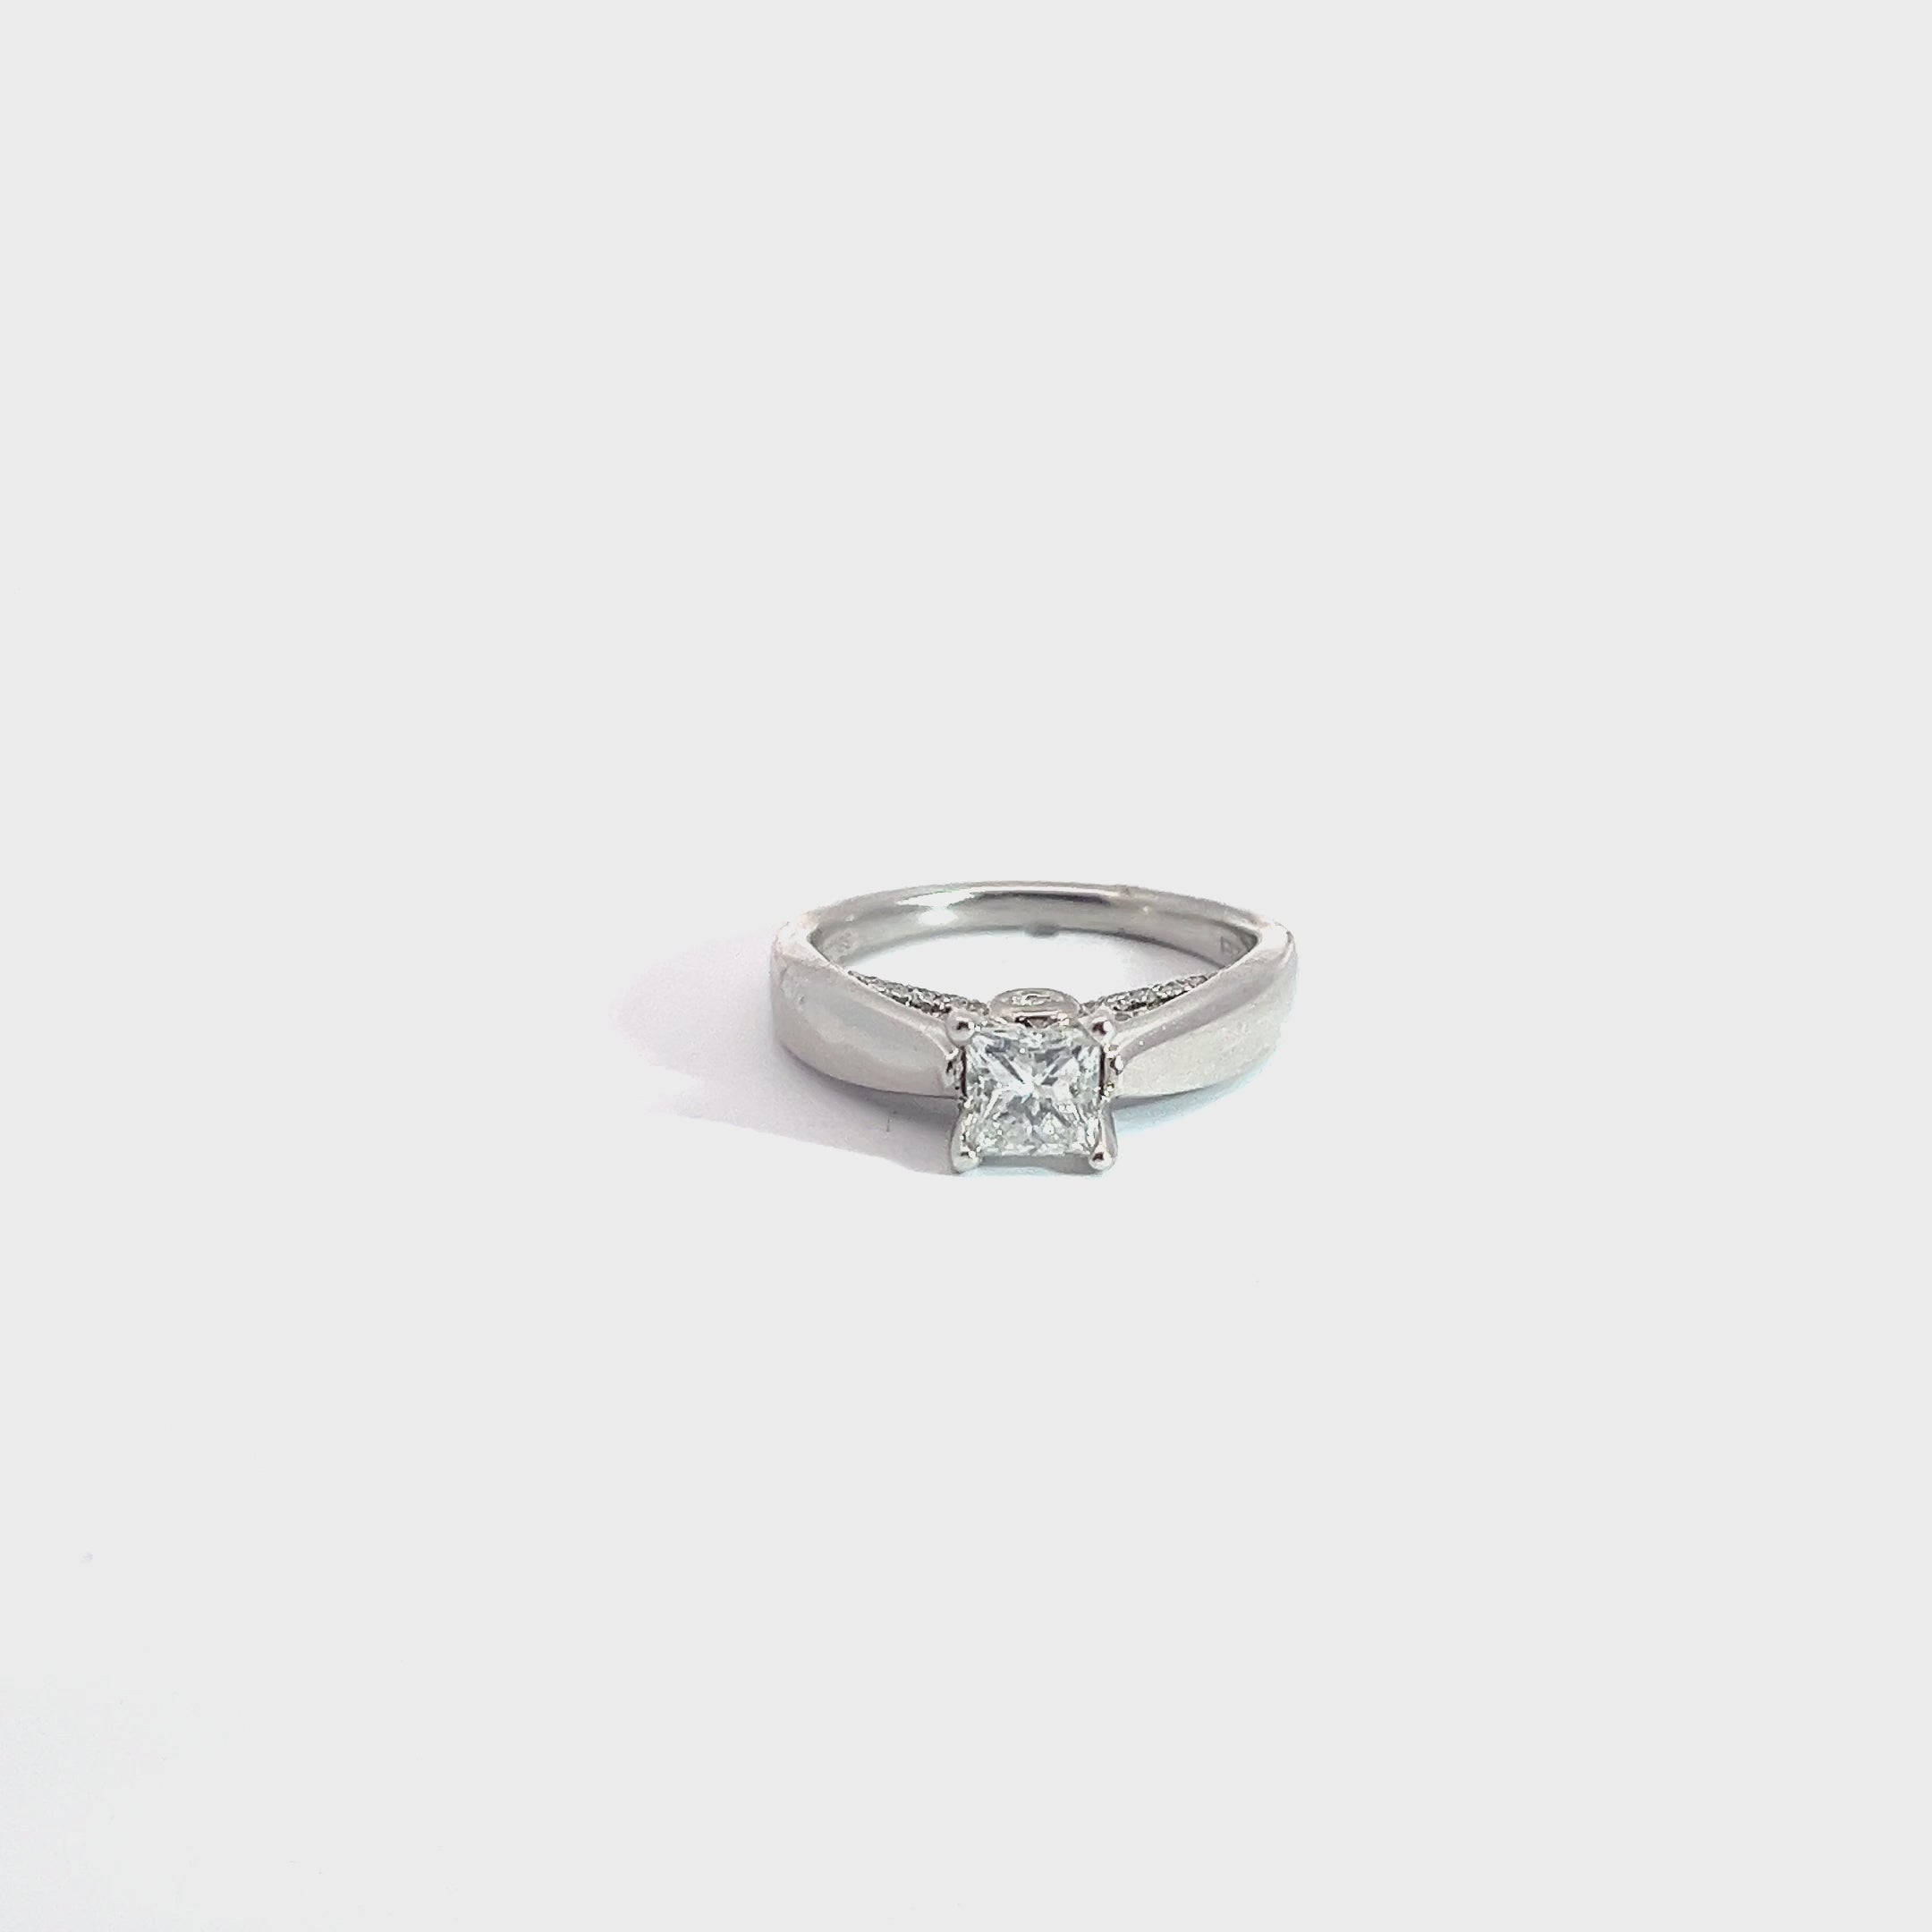 14k white gold 1.00ct G SI1 Princess Cut Diamond and .15ct G SI1 Round diamond under basket mounting engagement ring